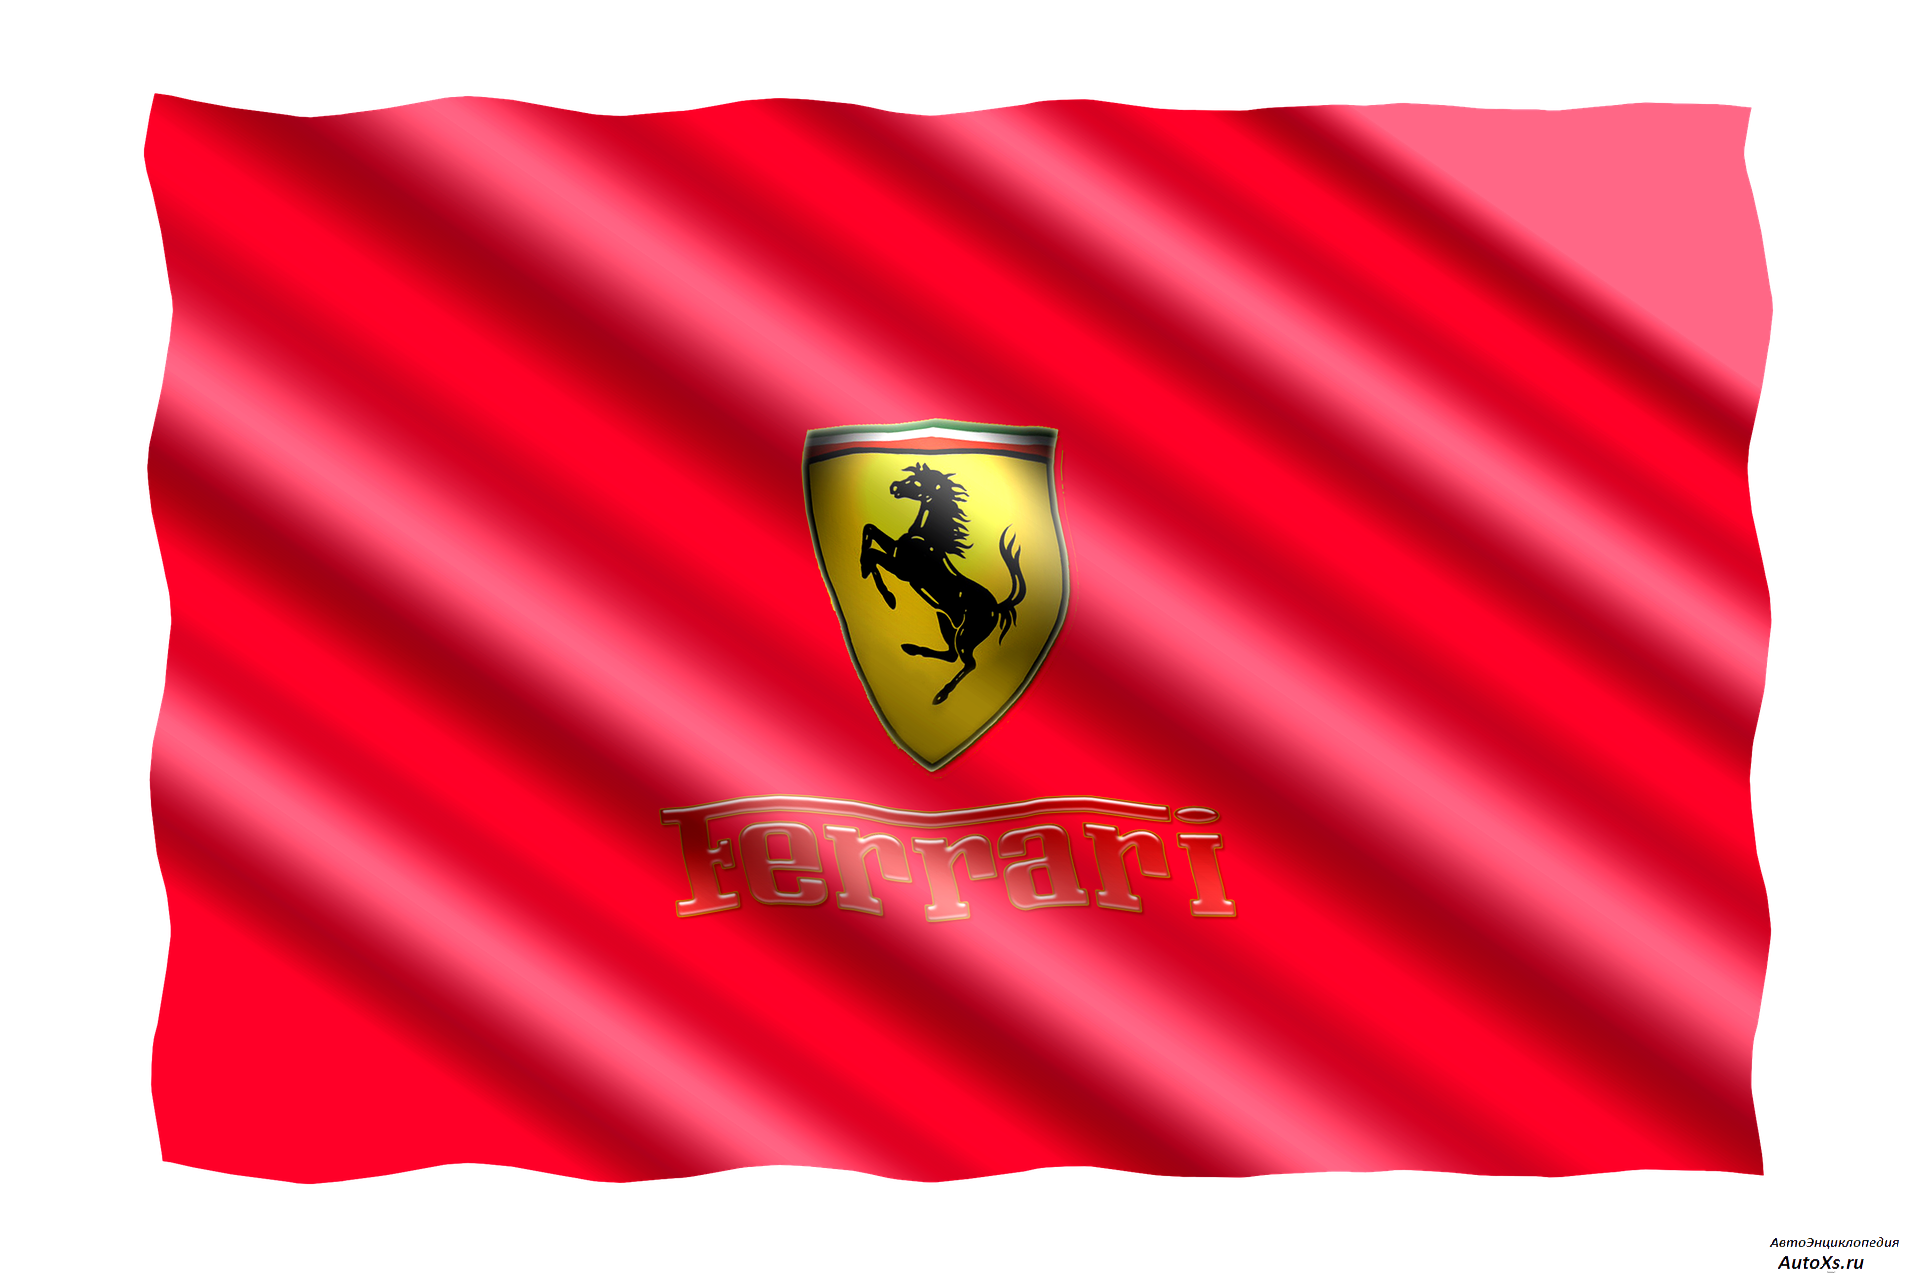 60 фактов о легендарном Ferrari